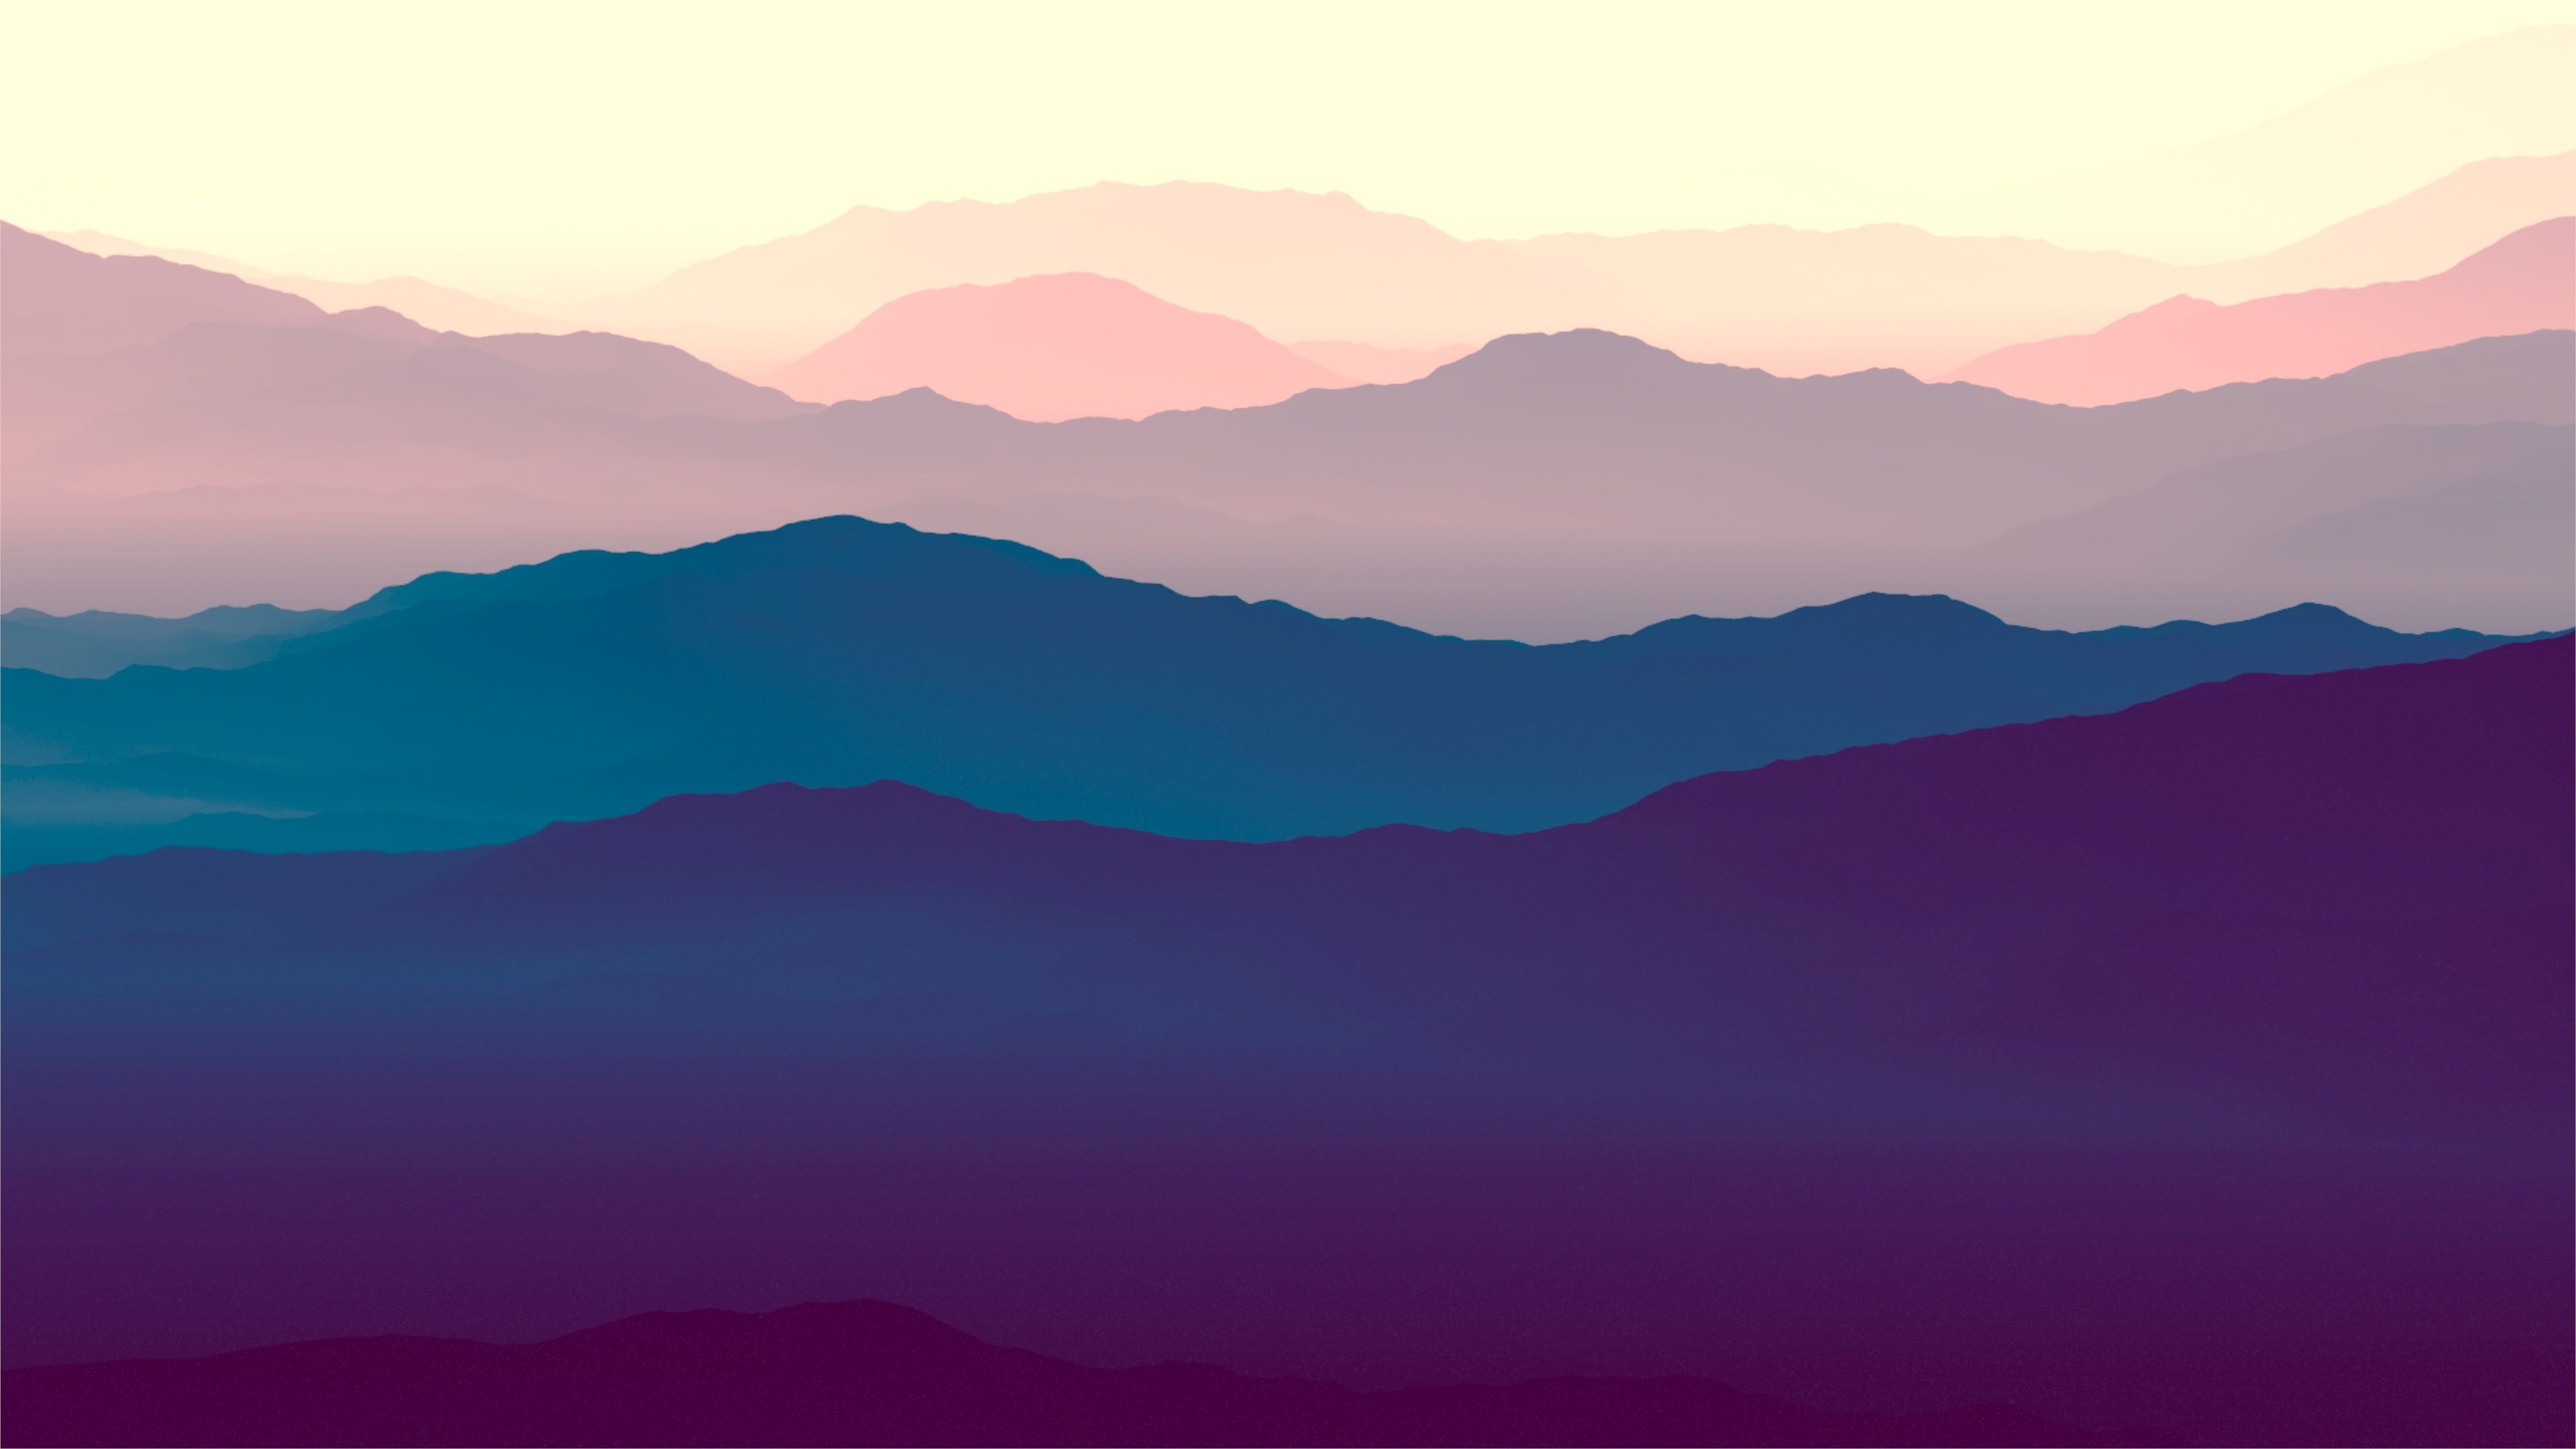 Download 3840x2400 wallpaper mountains, landscape, purple sunset, gradient, horizon, 4k, ultra HD 16: widescreen, 3840x2400 HD image, background, 7385